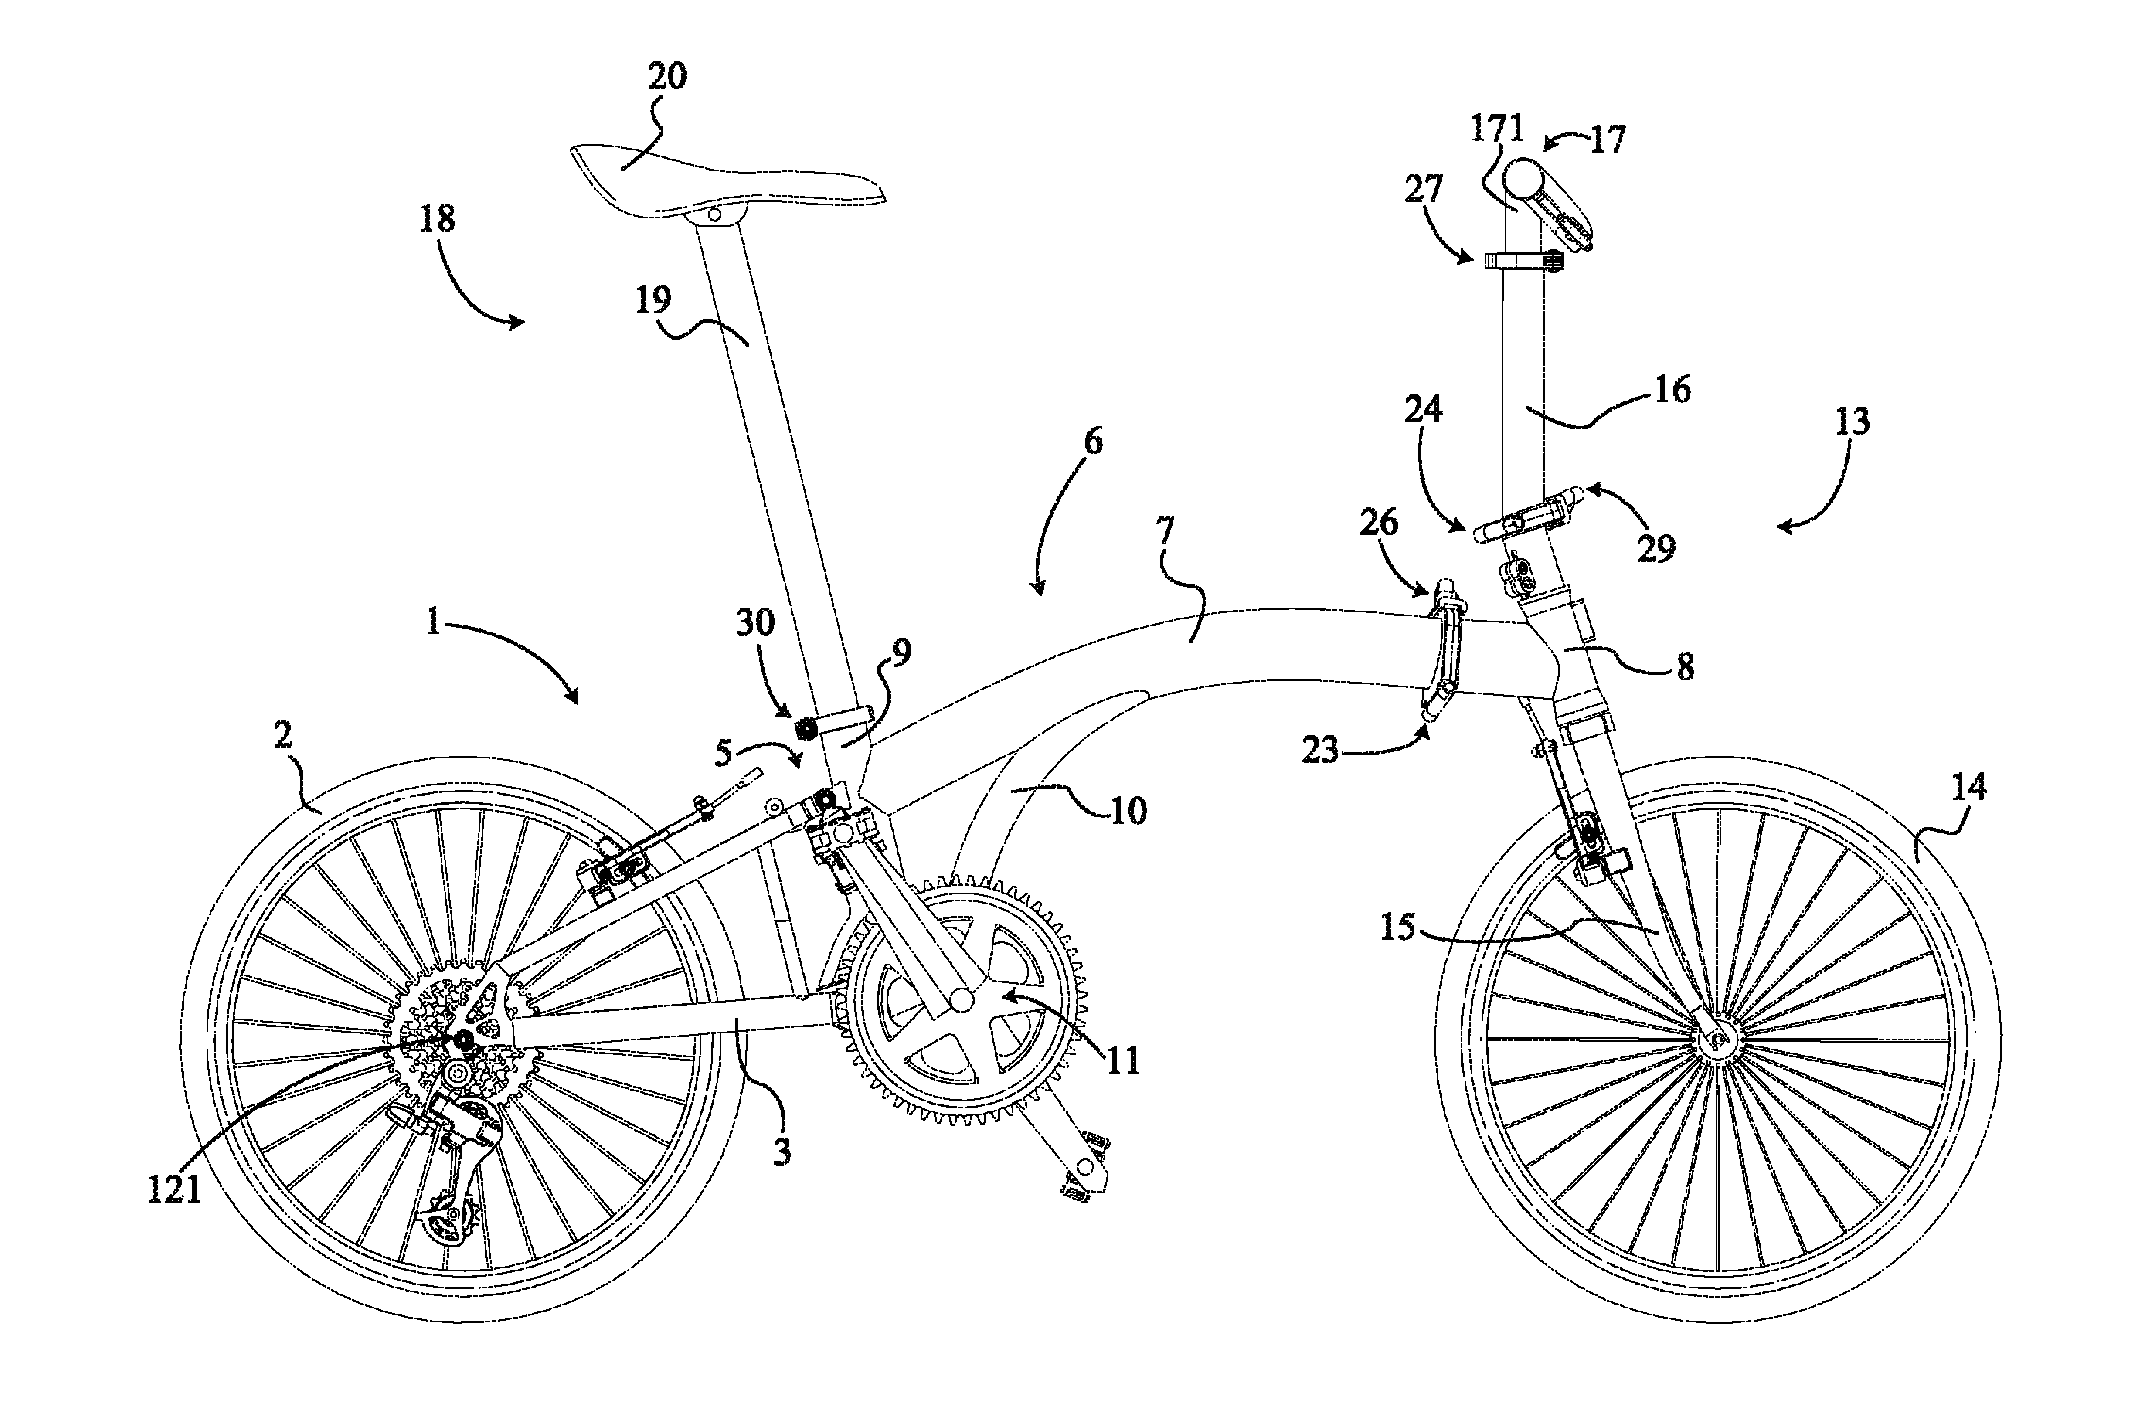 Folding bicycle assembly